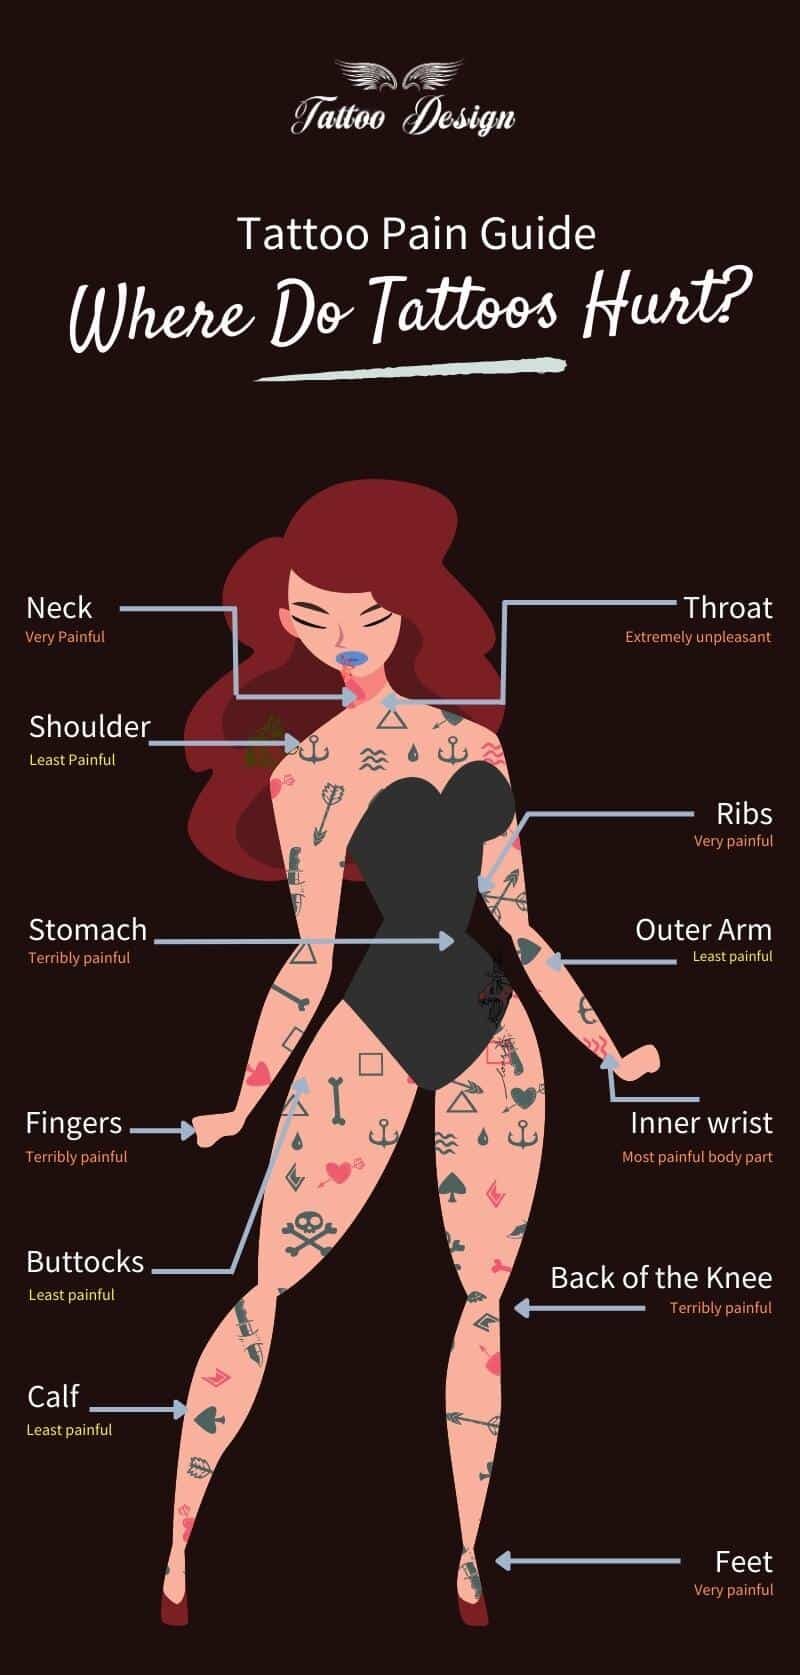 Where Do Tattoos Hurt infographic